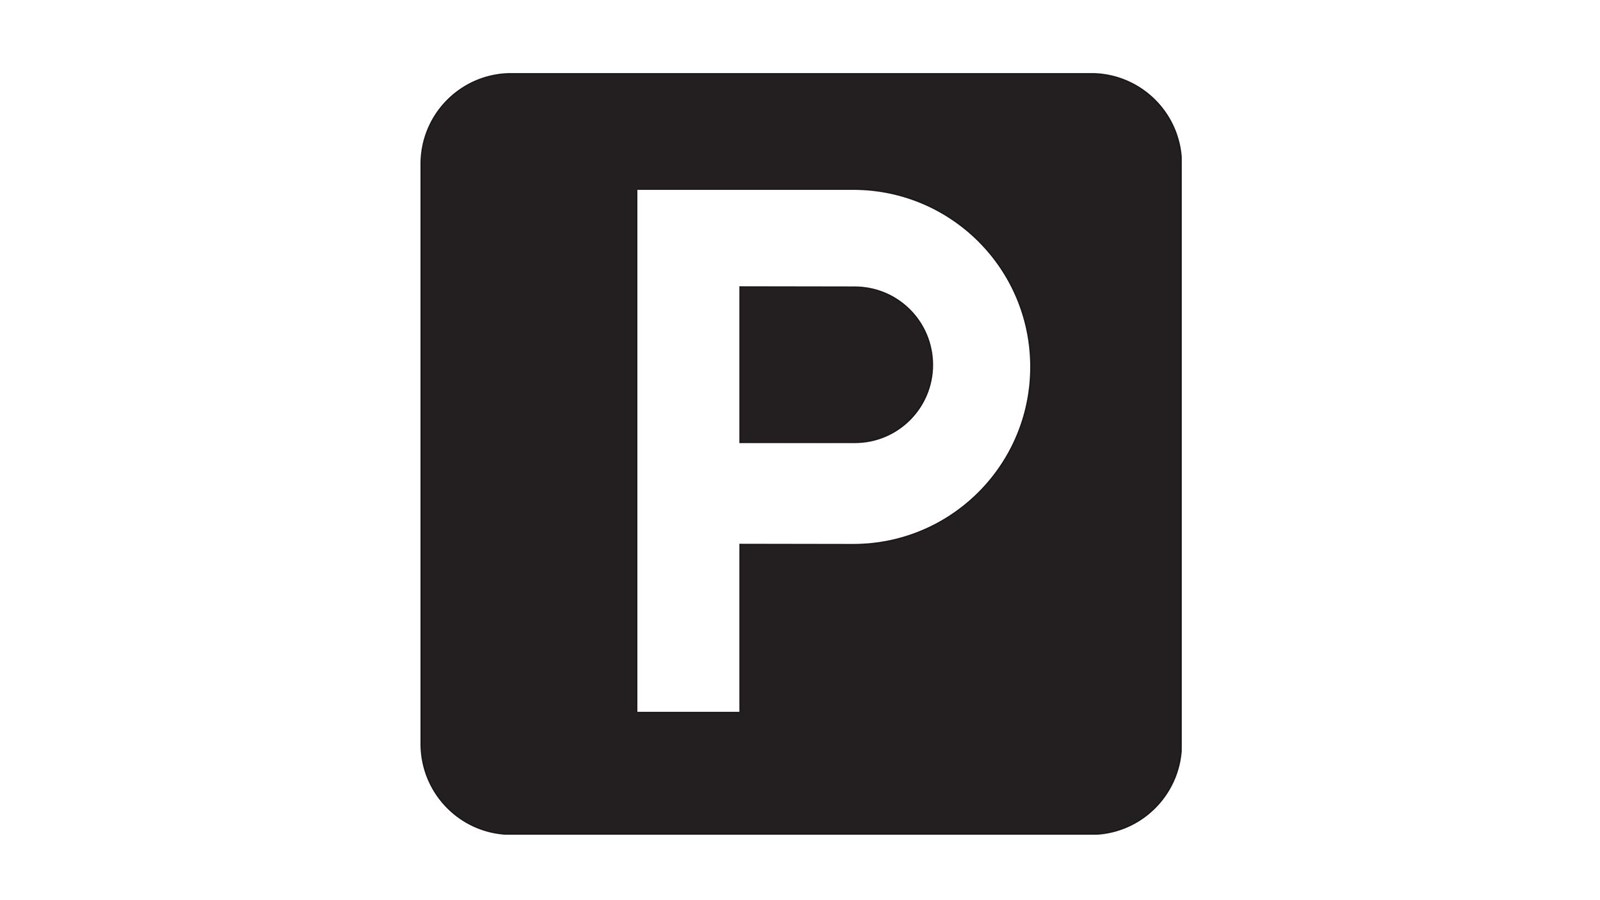 A P symbol denoting a parking area